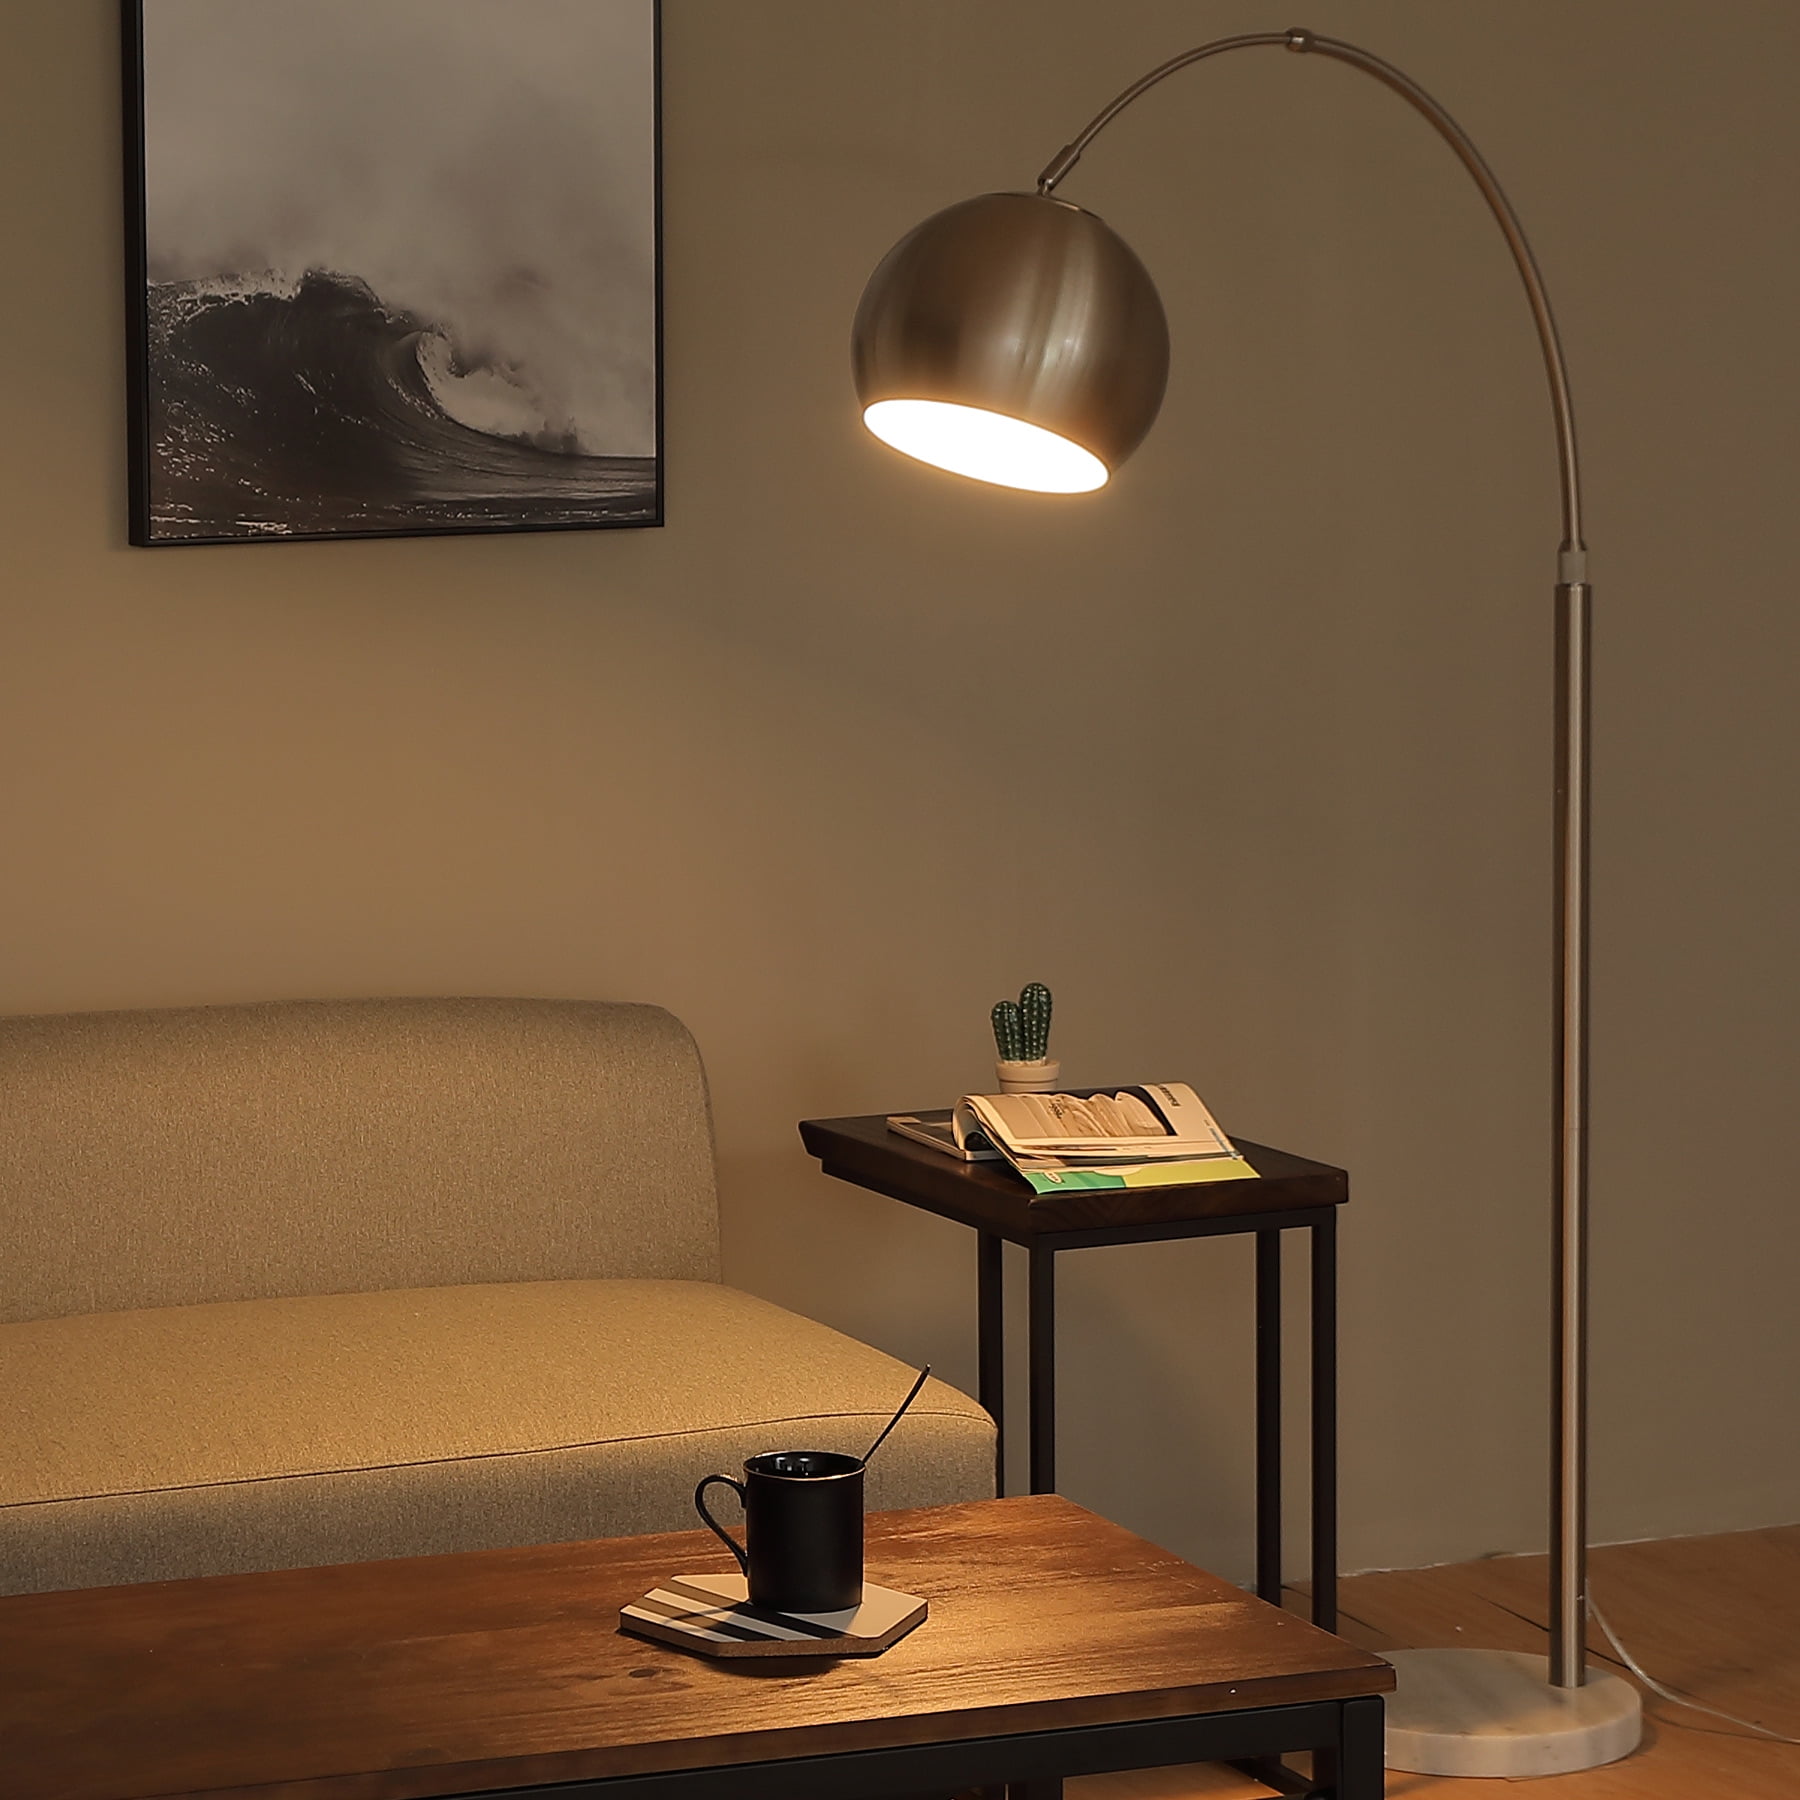 70" LED Floor Lamp Industrial Art Metal Living Room Read Decor Light Swing Arm 